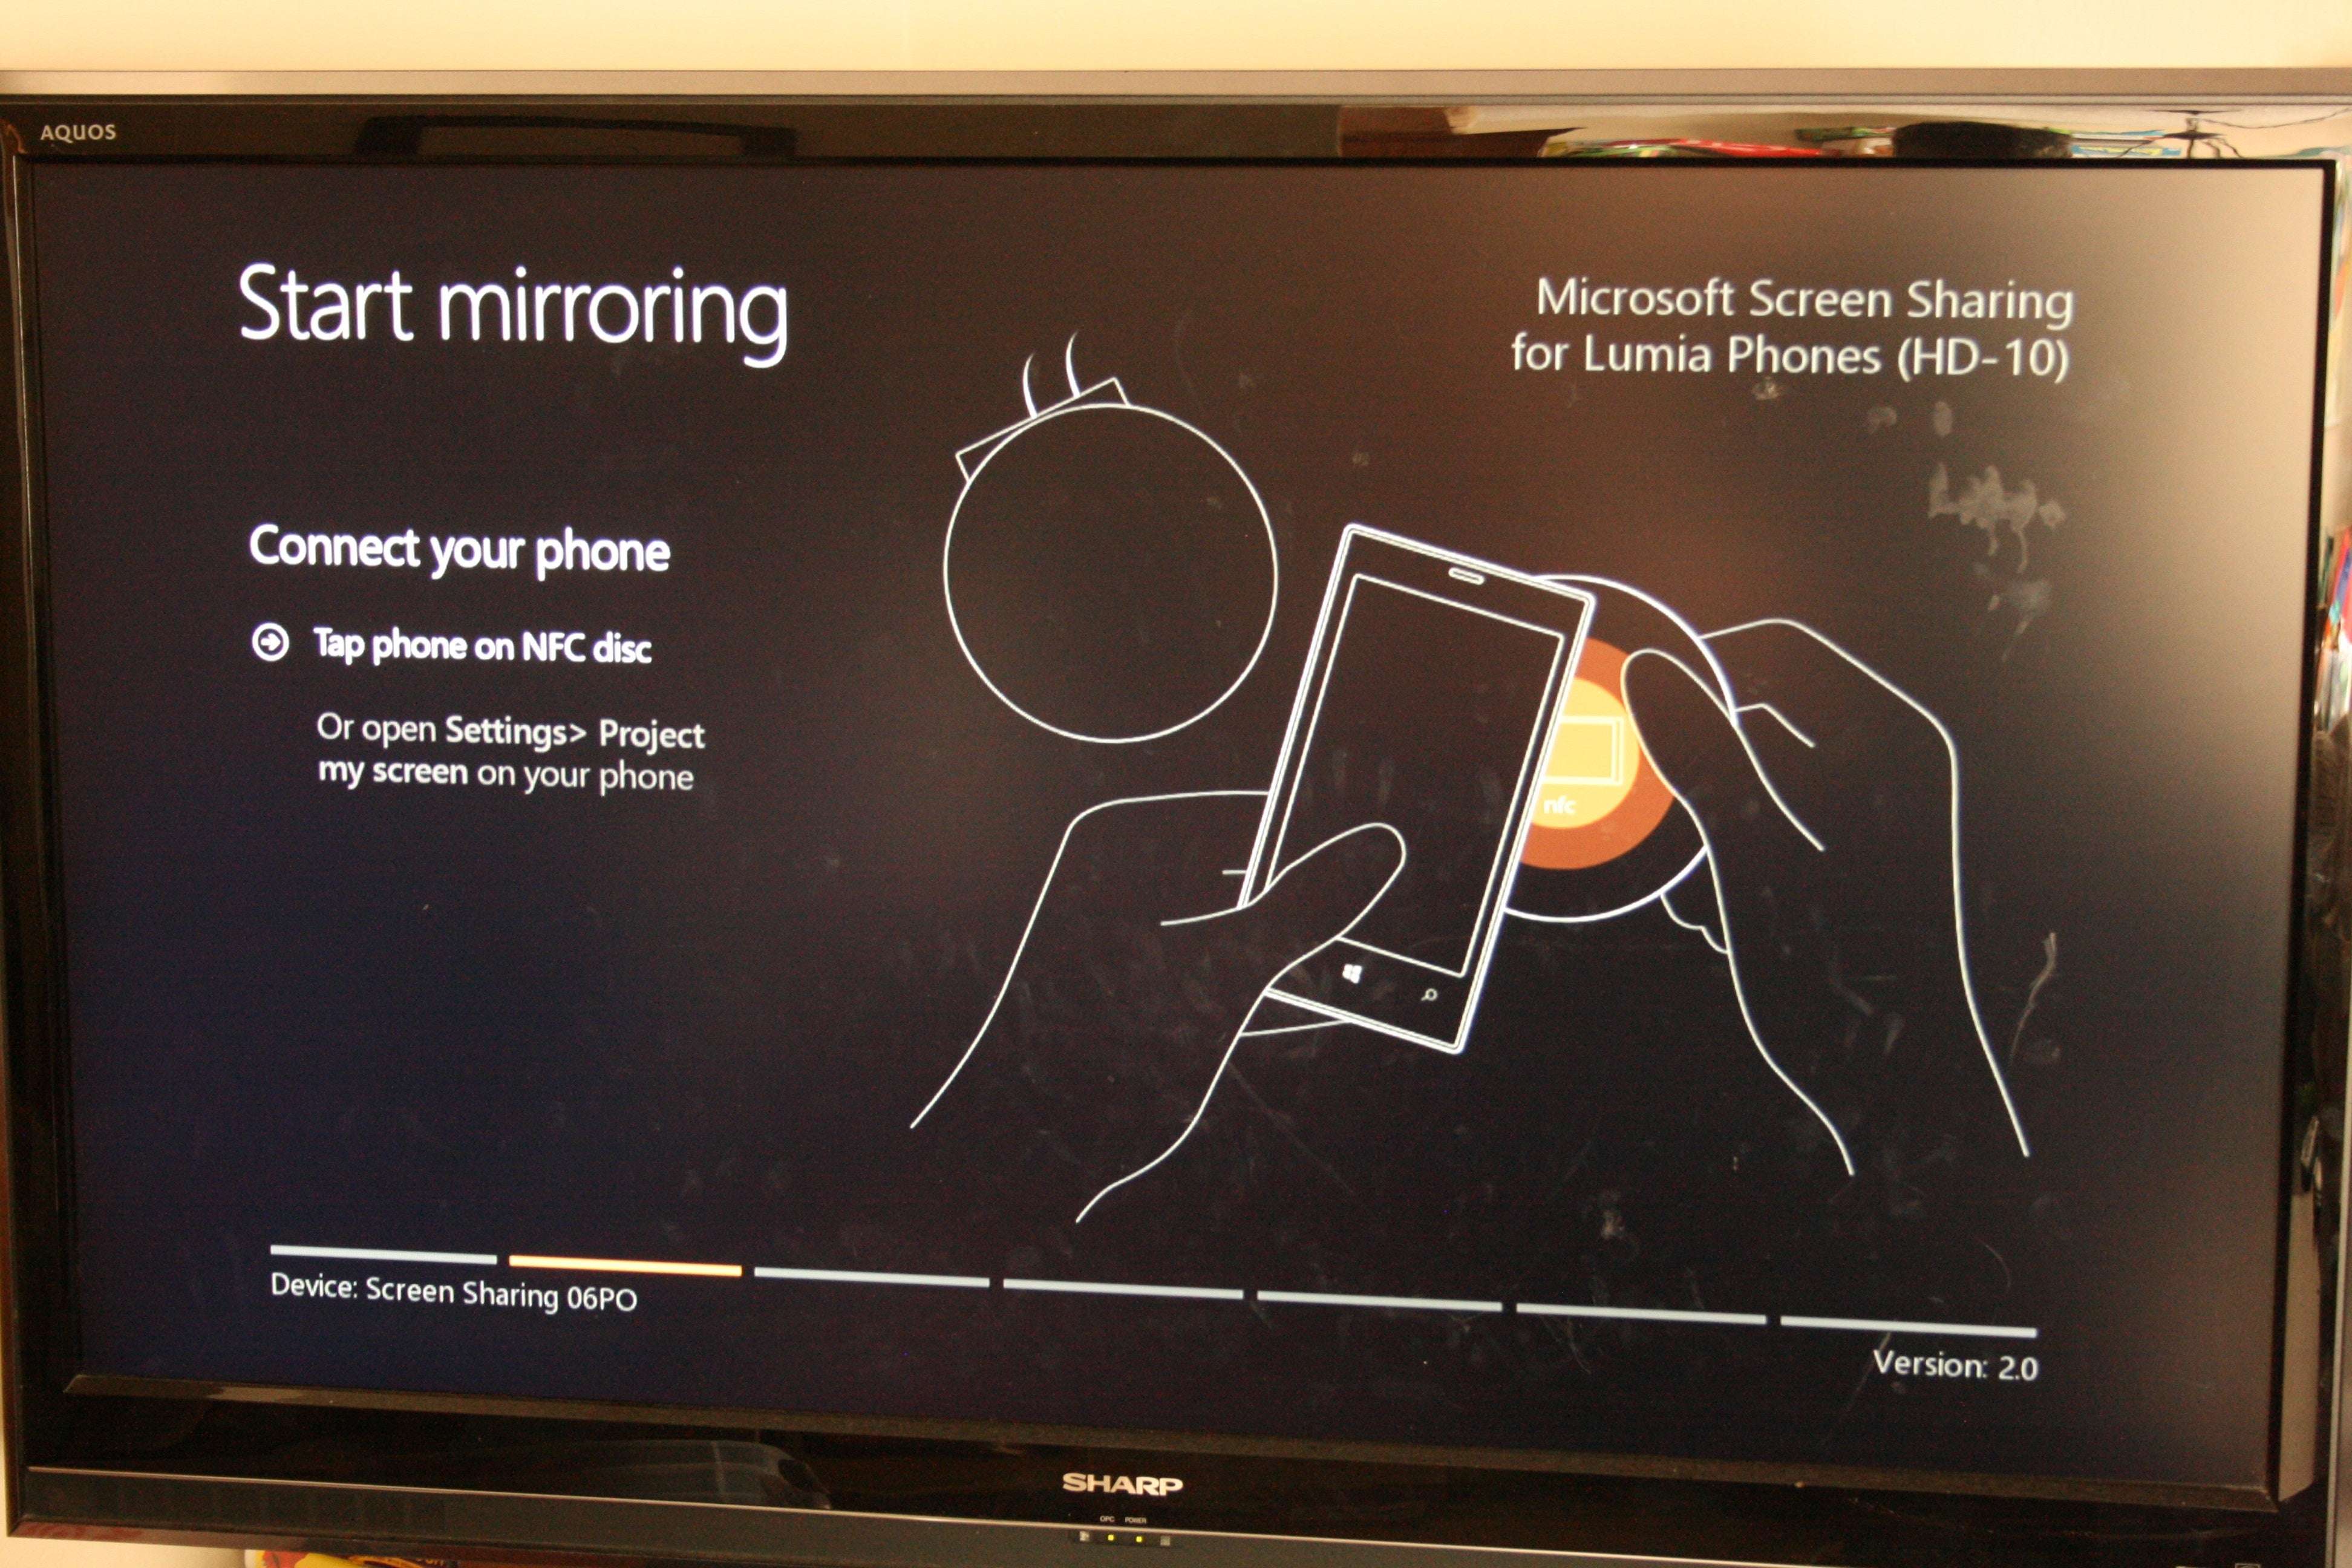 microsoft screen sharing for lumia phones hd 10